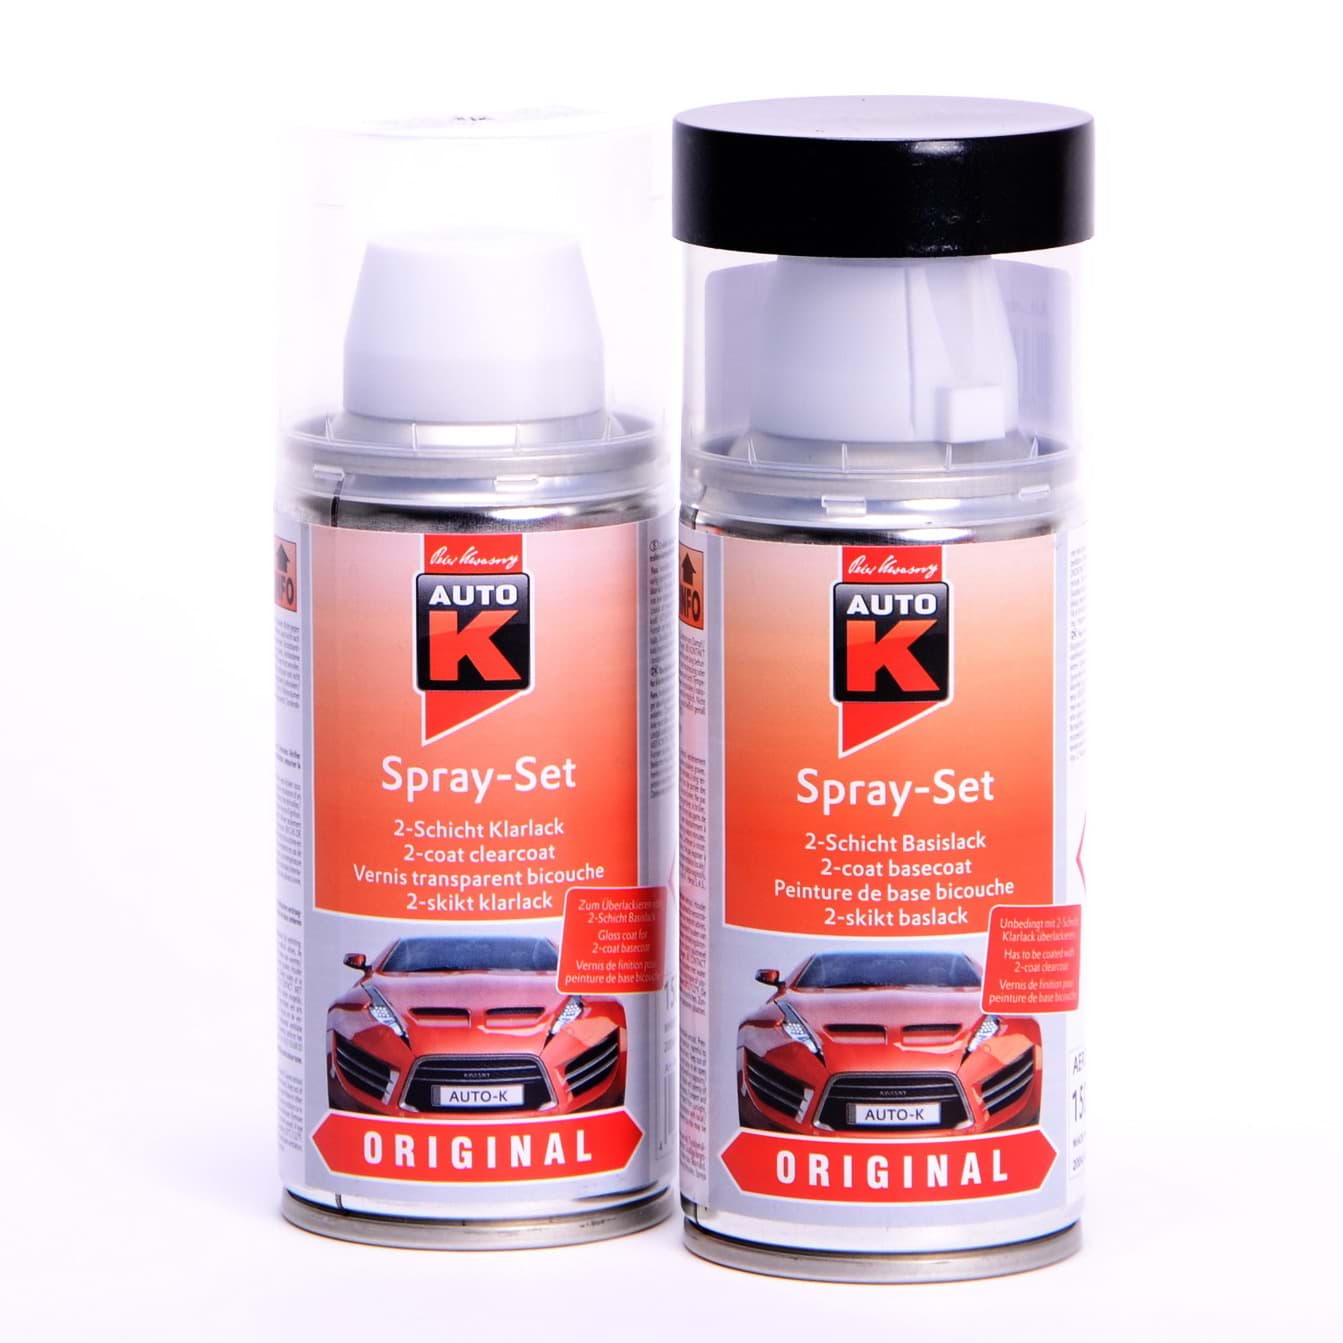 Auto-K Spray-Set Autolack für Mercedes 582 Imperialrot 23300 resmi